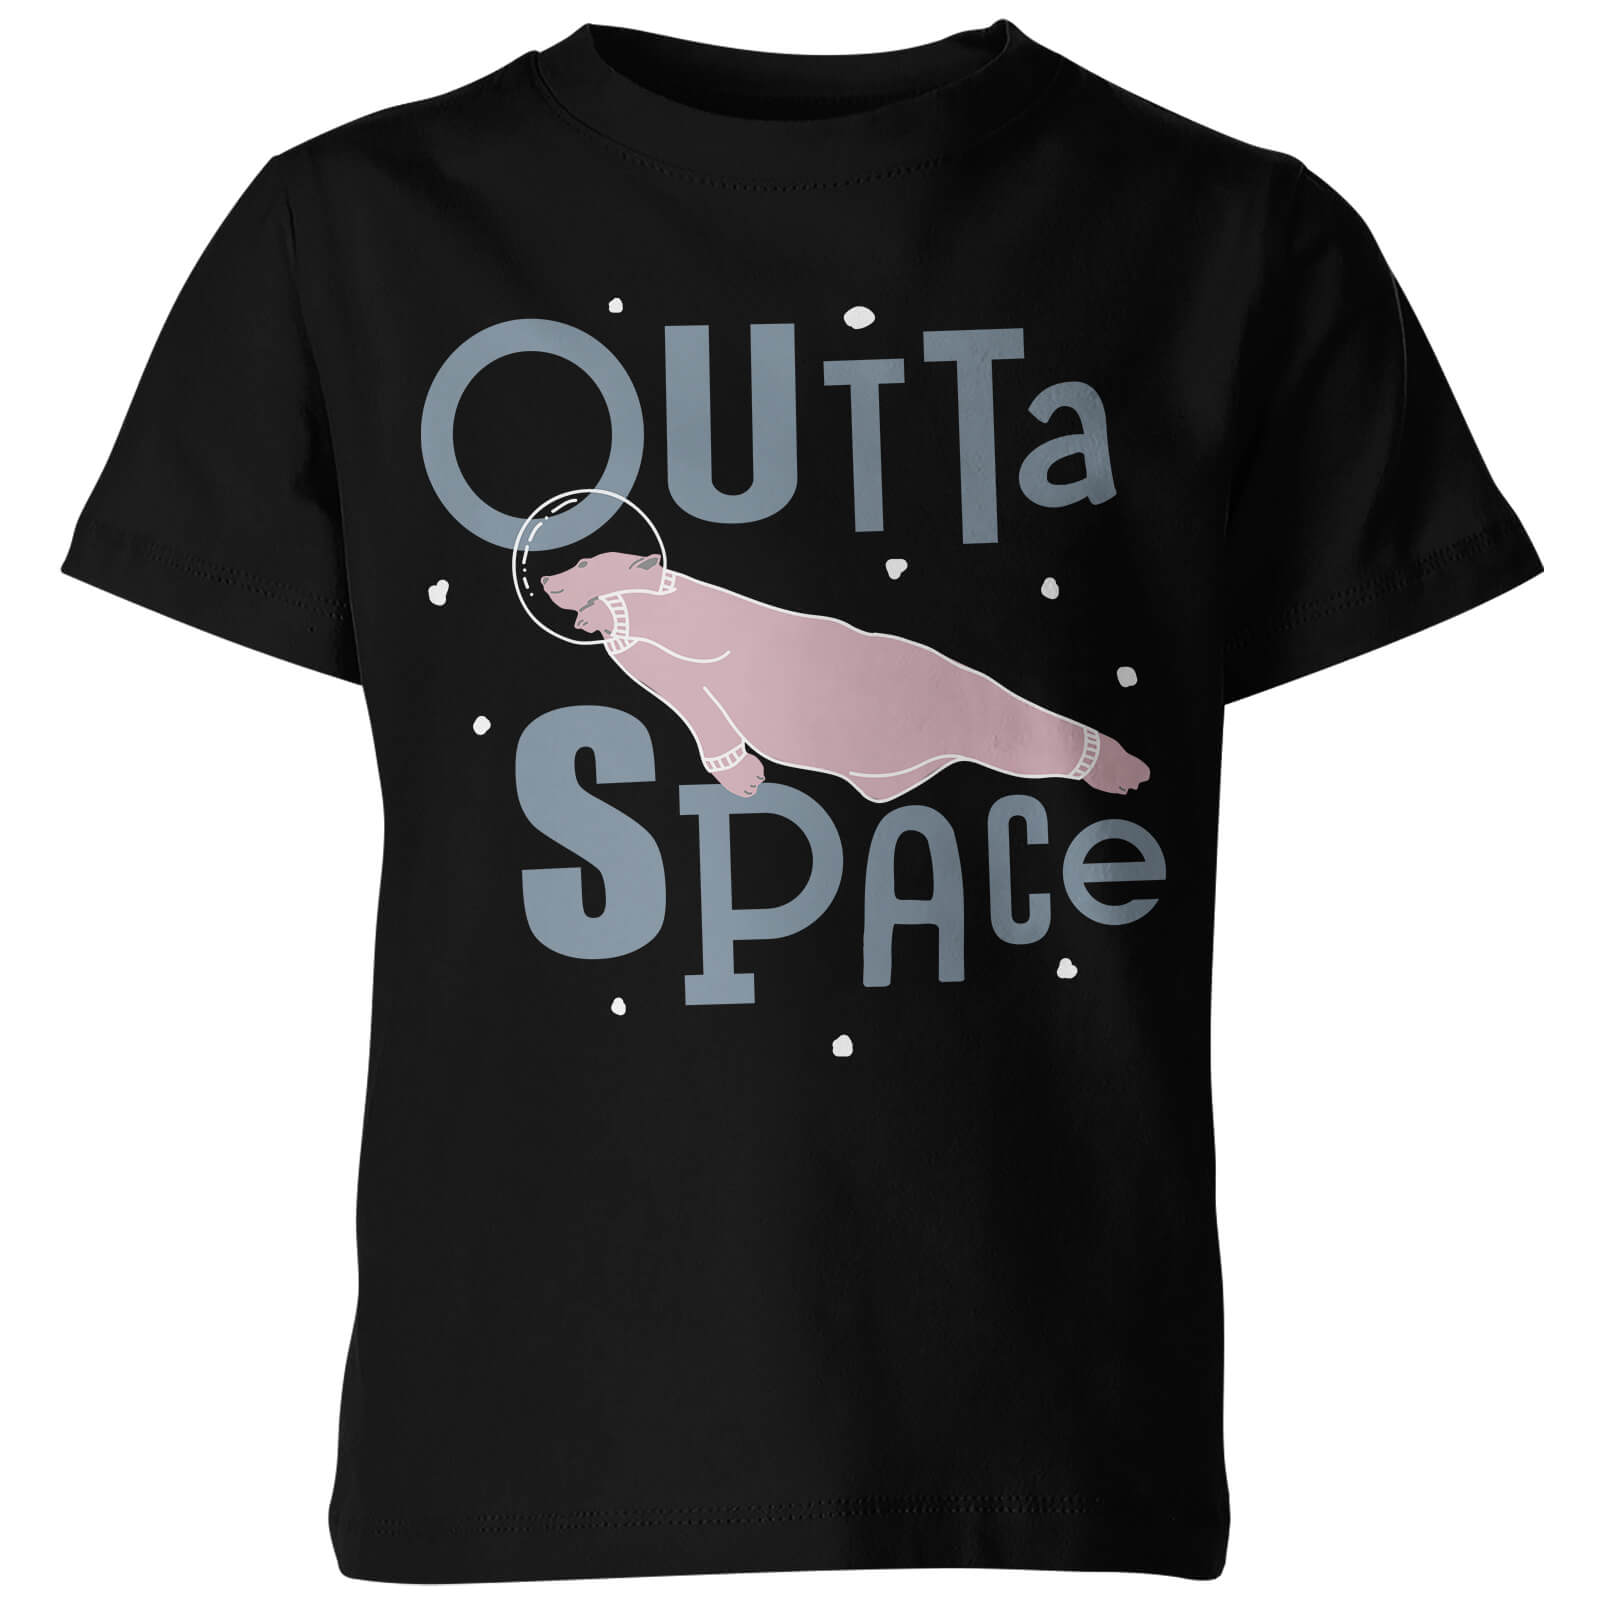 My Little Rascal Kids Outta Space Black T-Shirt - 3-4 Years - Black